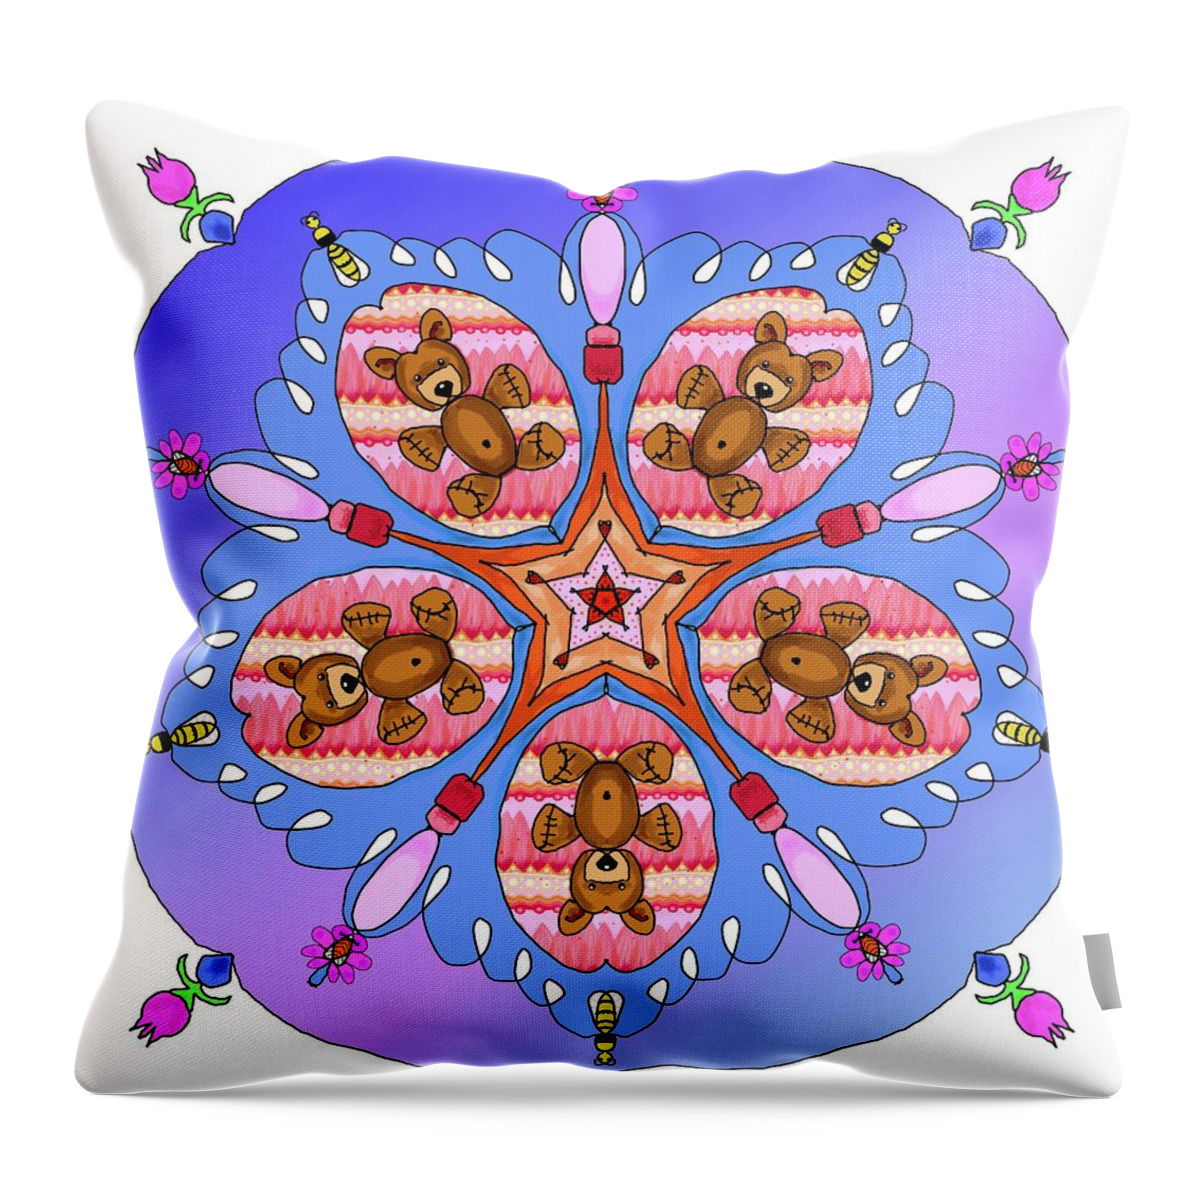 Kaleidoscope Throw Pillow featuring the digital art Kaleidoscope of bears and bees by Debra Baldwin